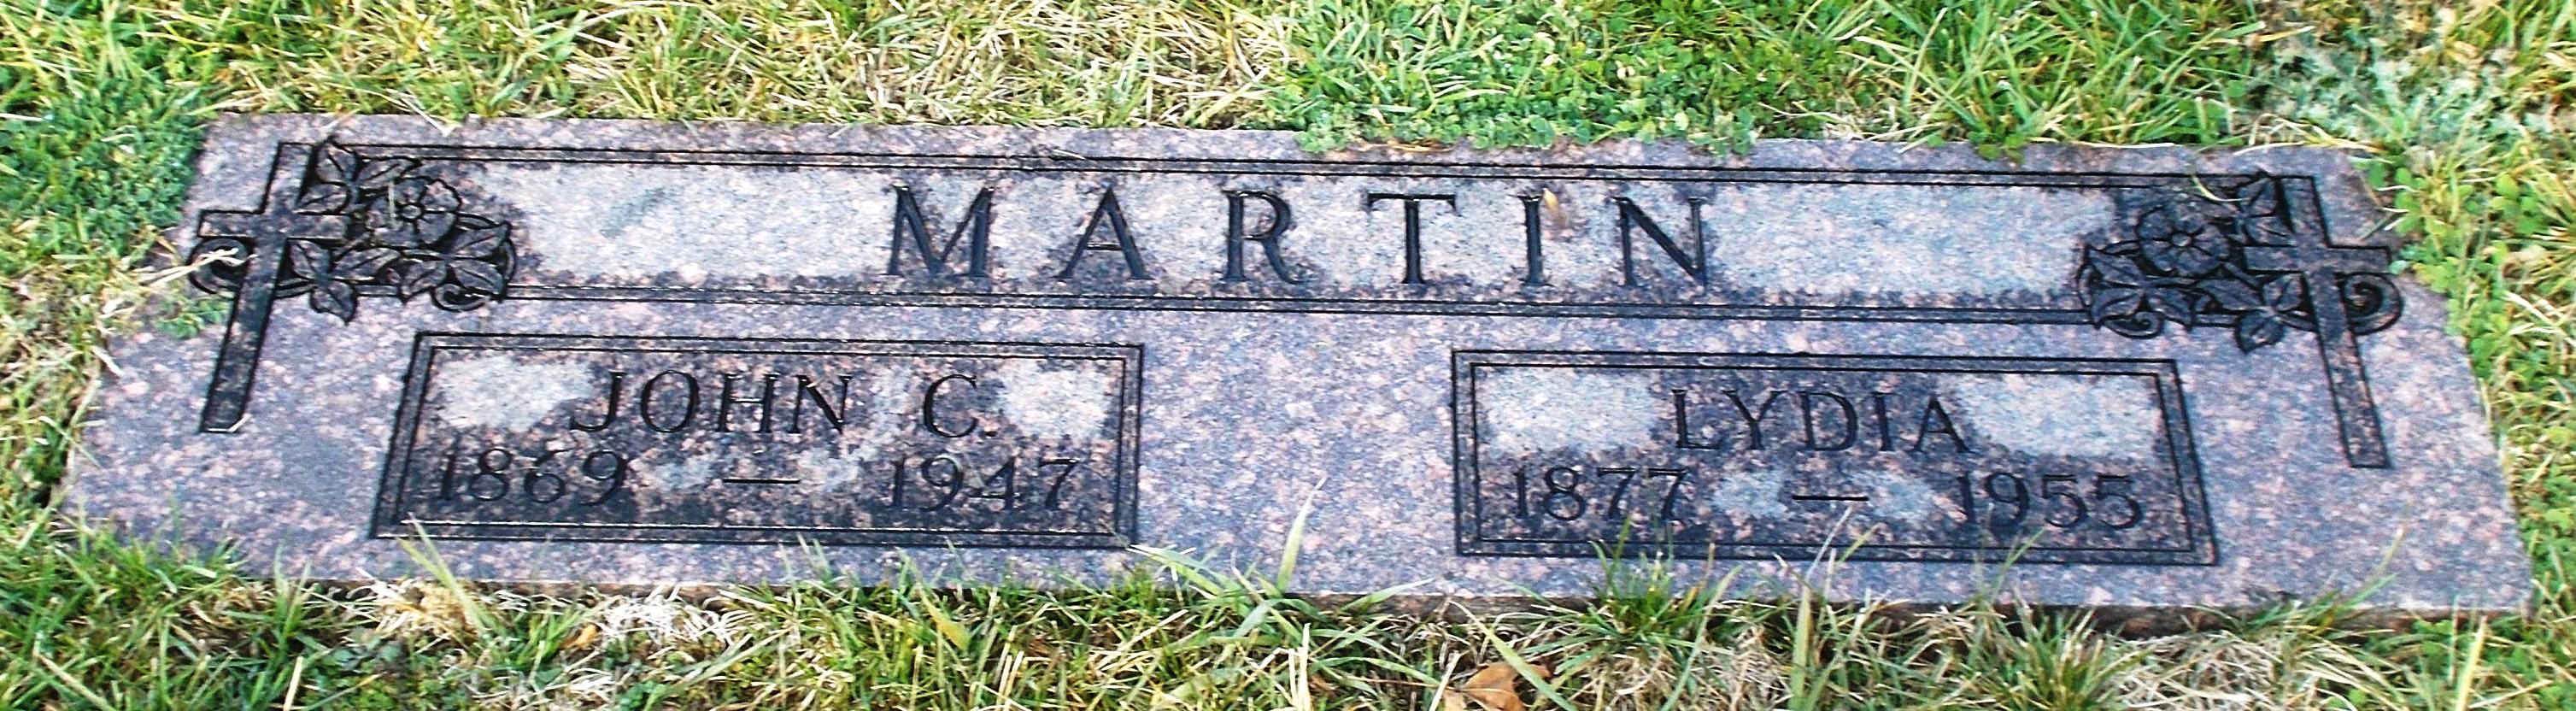 John C Martin